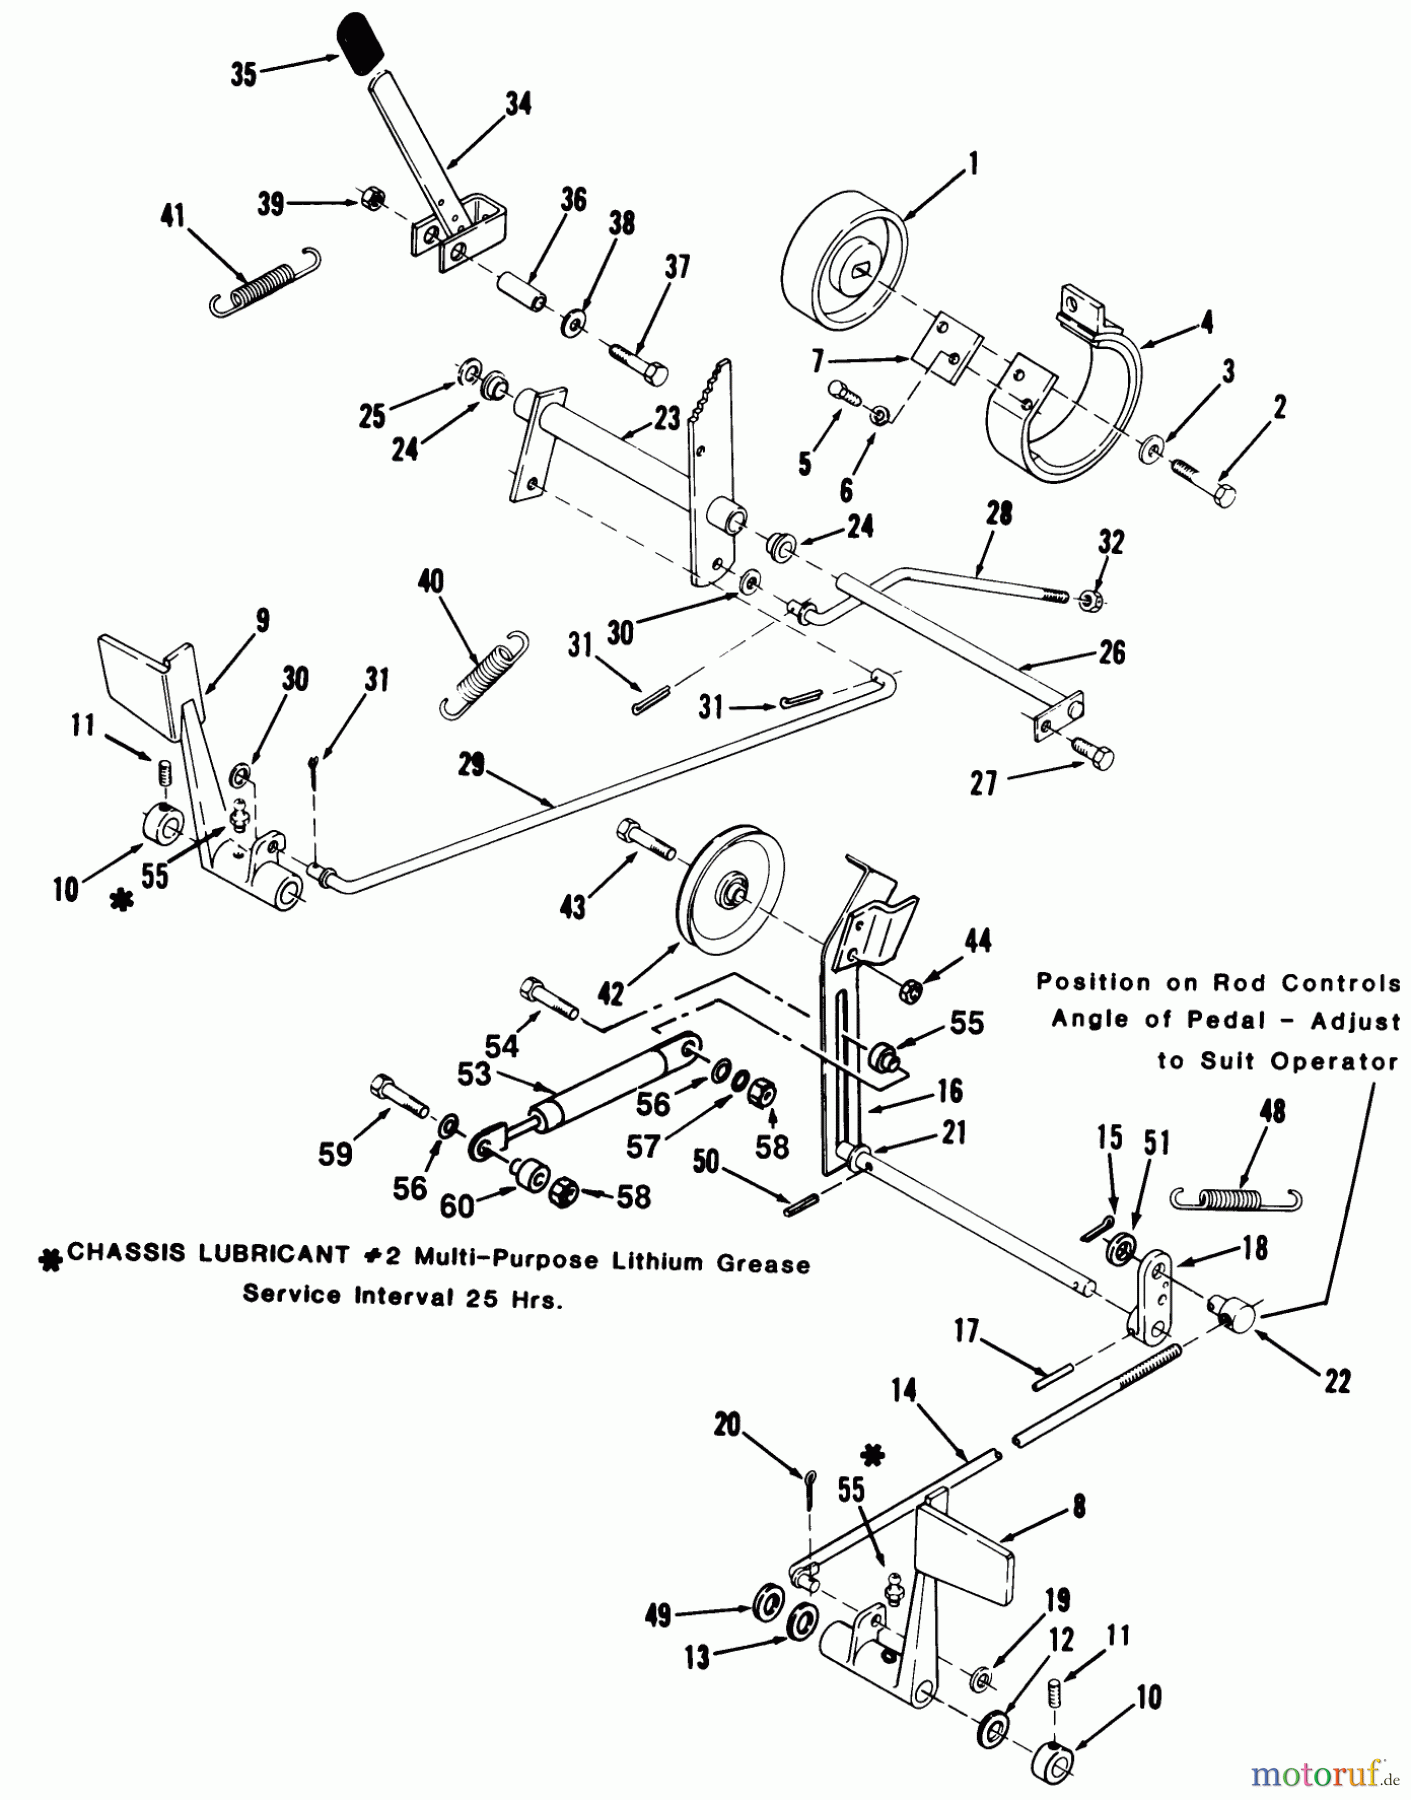  Toro Neu Mowers, Lawn & Garden Tractor Seite 1 51-16OE01 (416-H) - Toro 416-H Garden Tractor, 1991 (1000001-1999999) CLUTCH, BRAKE AND SPEED CONTROL LINKAGE